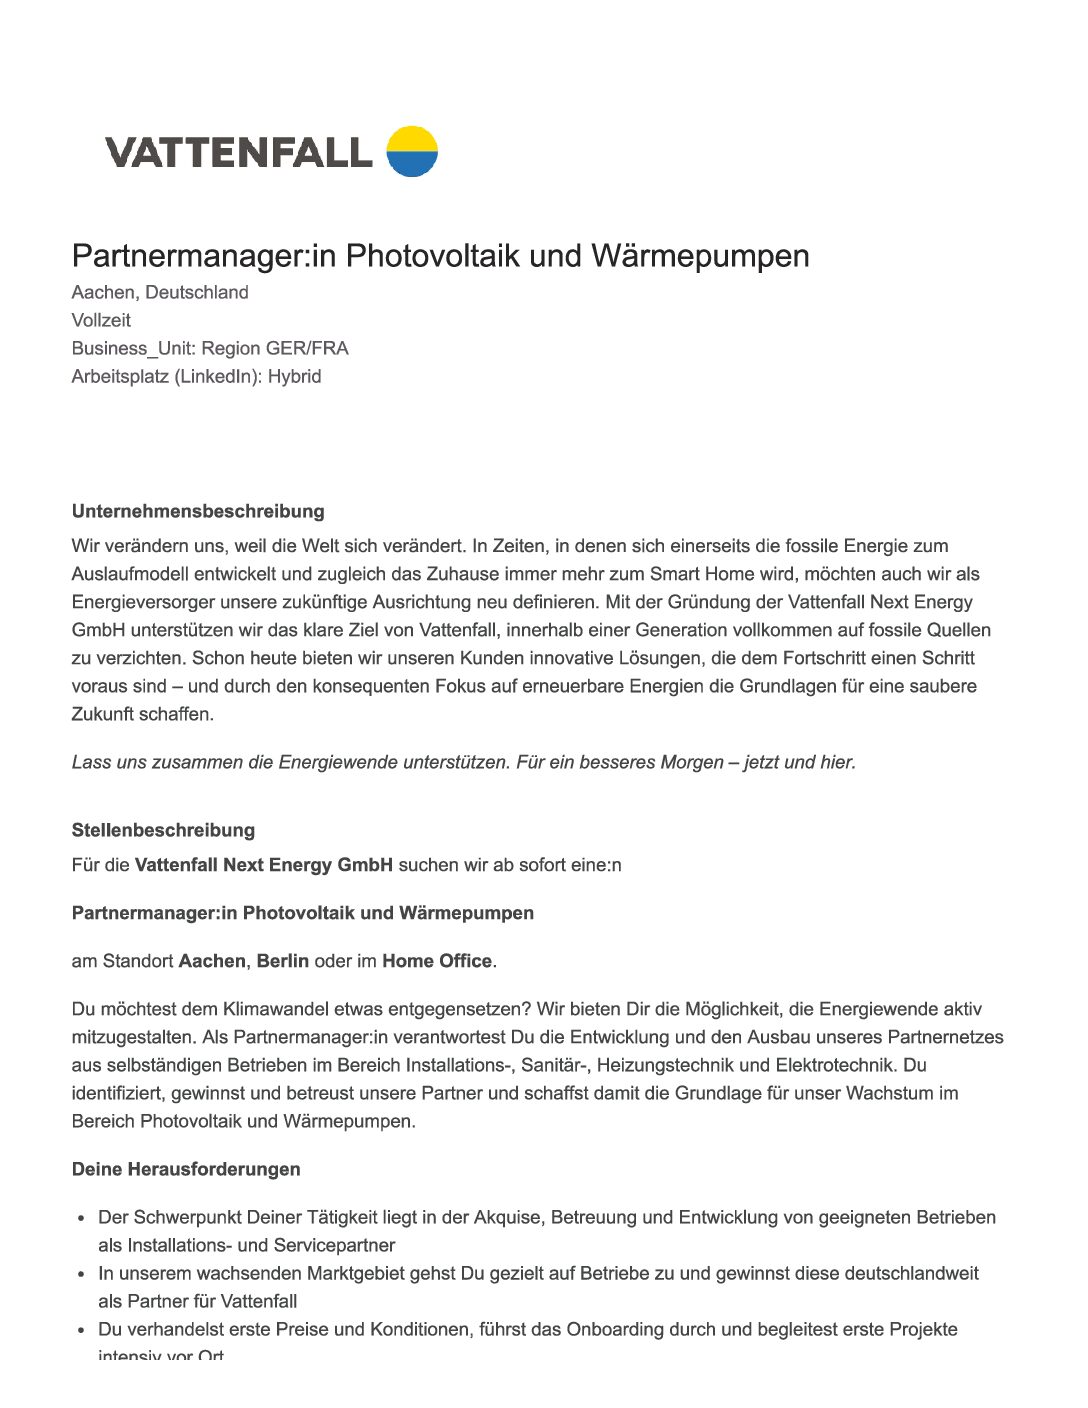 Vattenfall_Partnermanager-Photovoltaik-und-Waermepumpen-4-pdf  